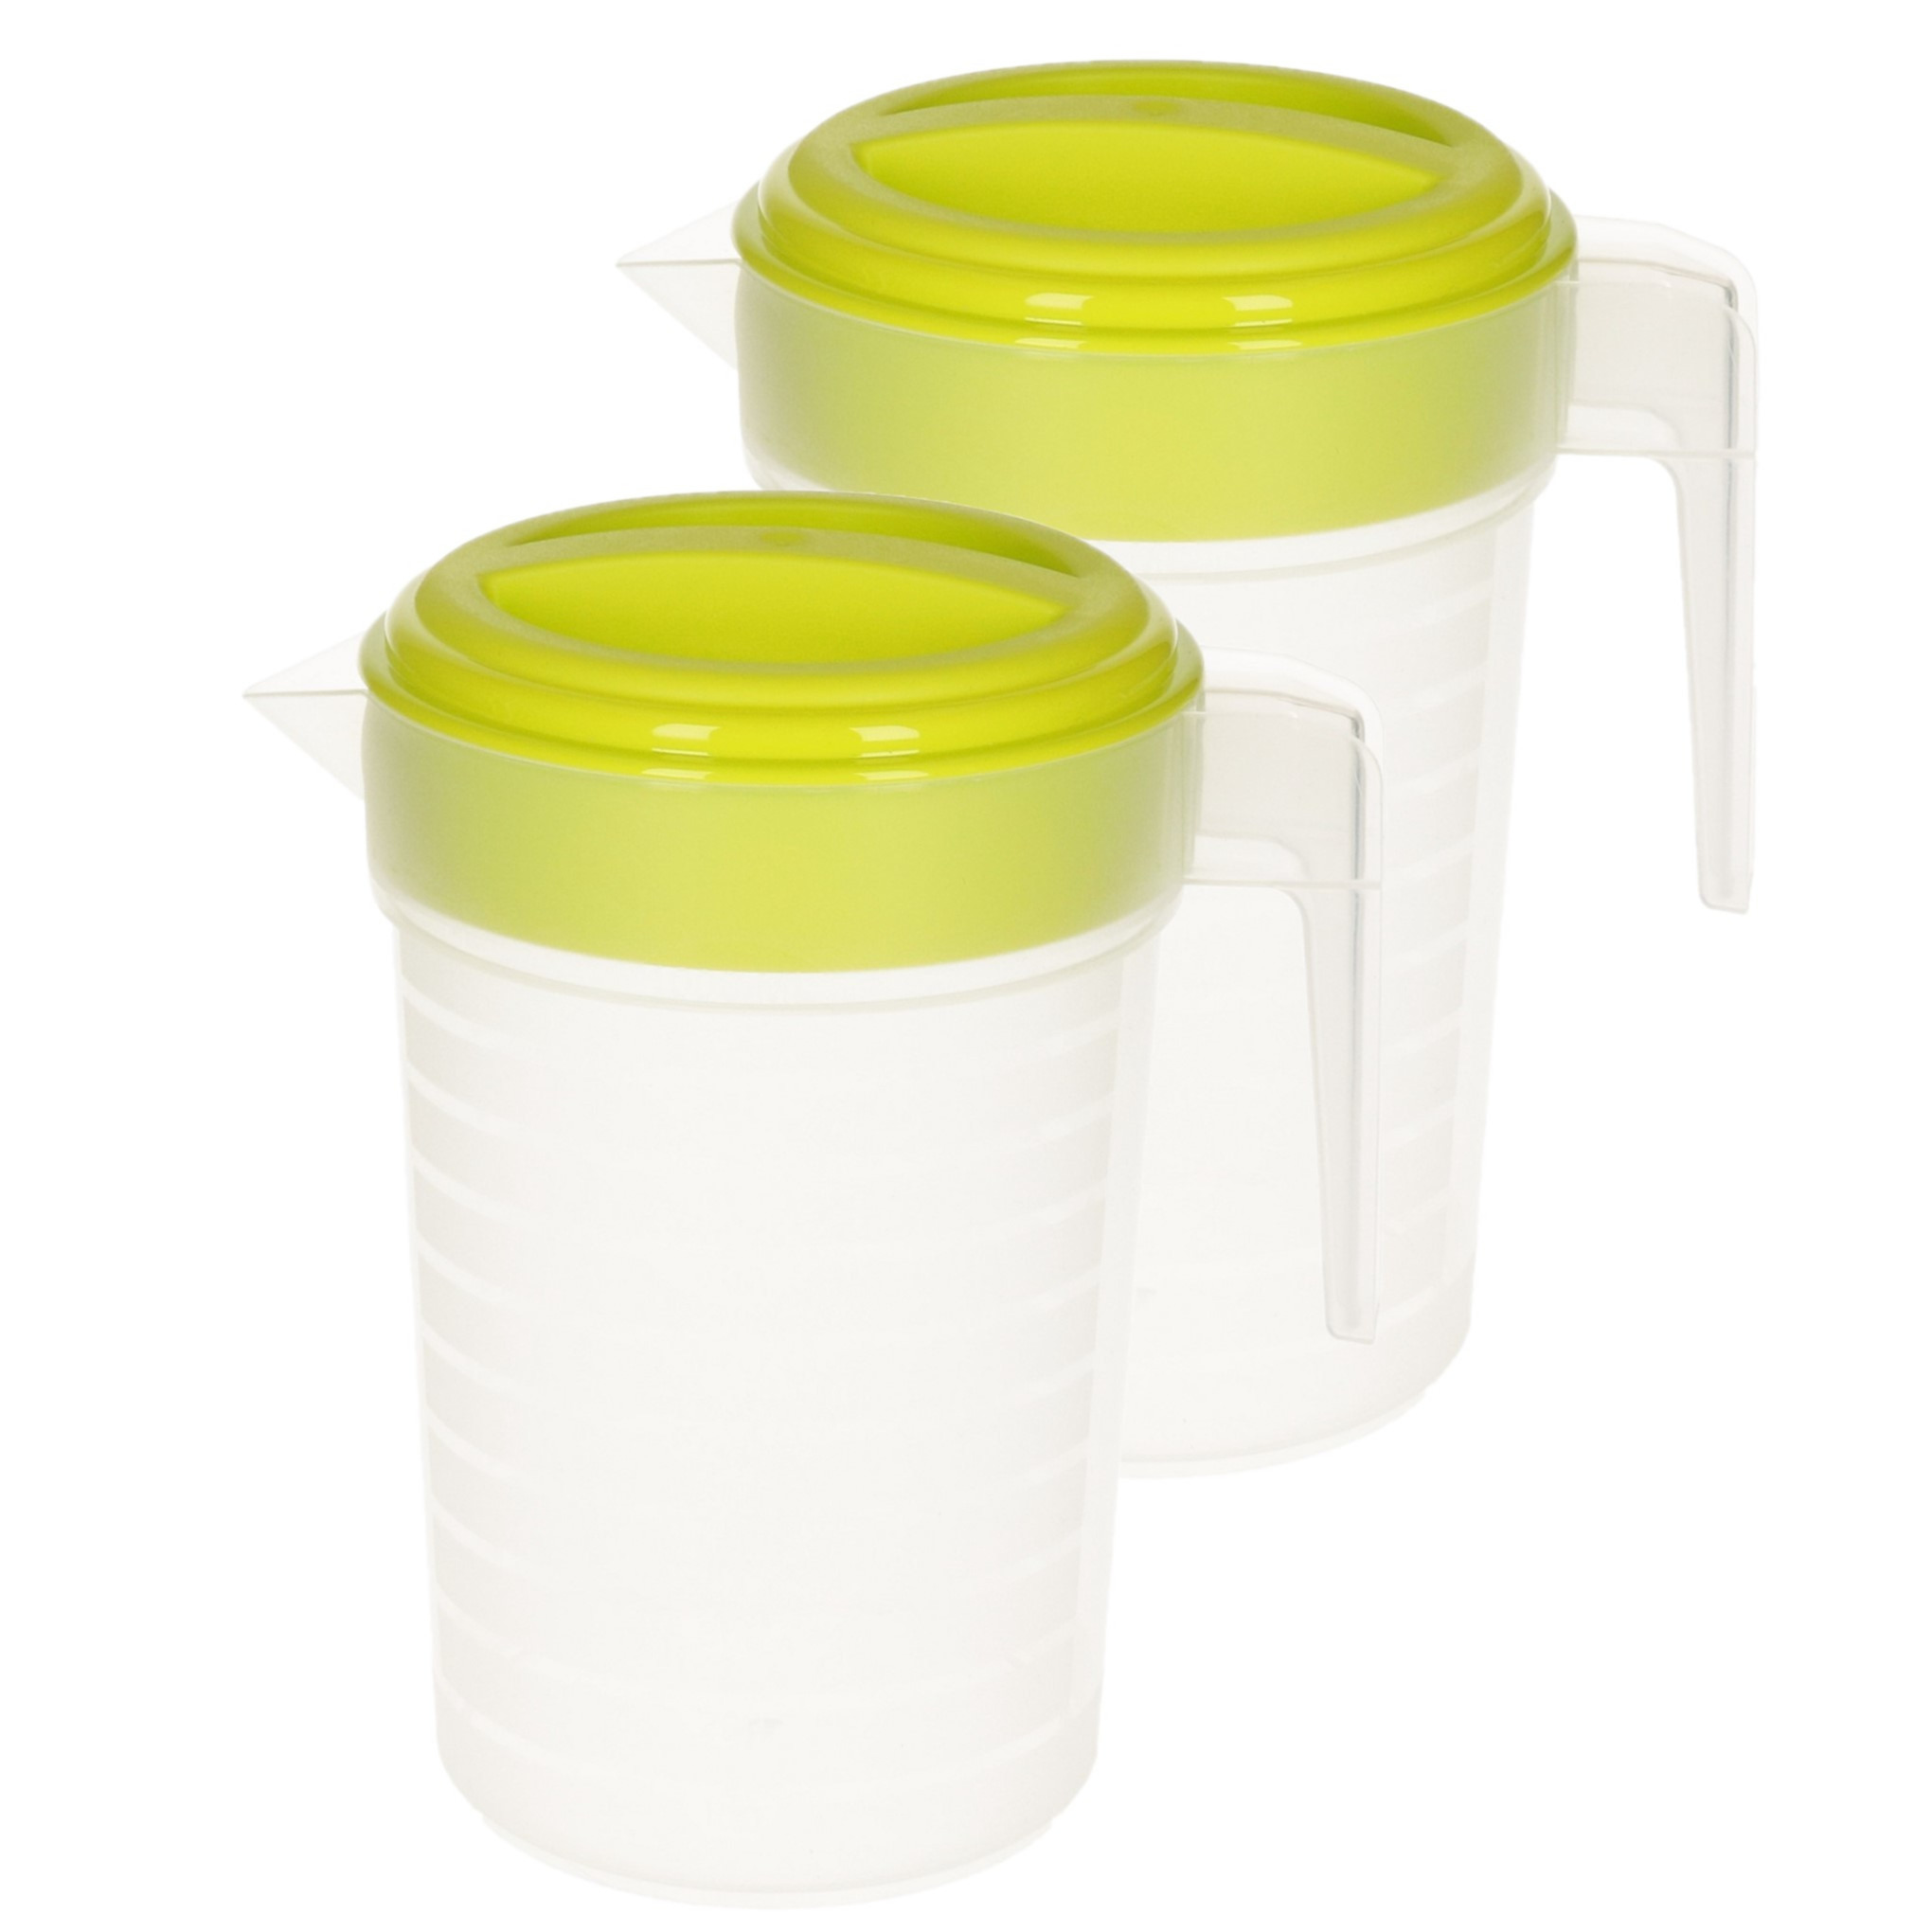 PlasticForte 2x stuks waterkan/sapkan transparant/groen met deksel 2 liter kunststof -